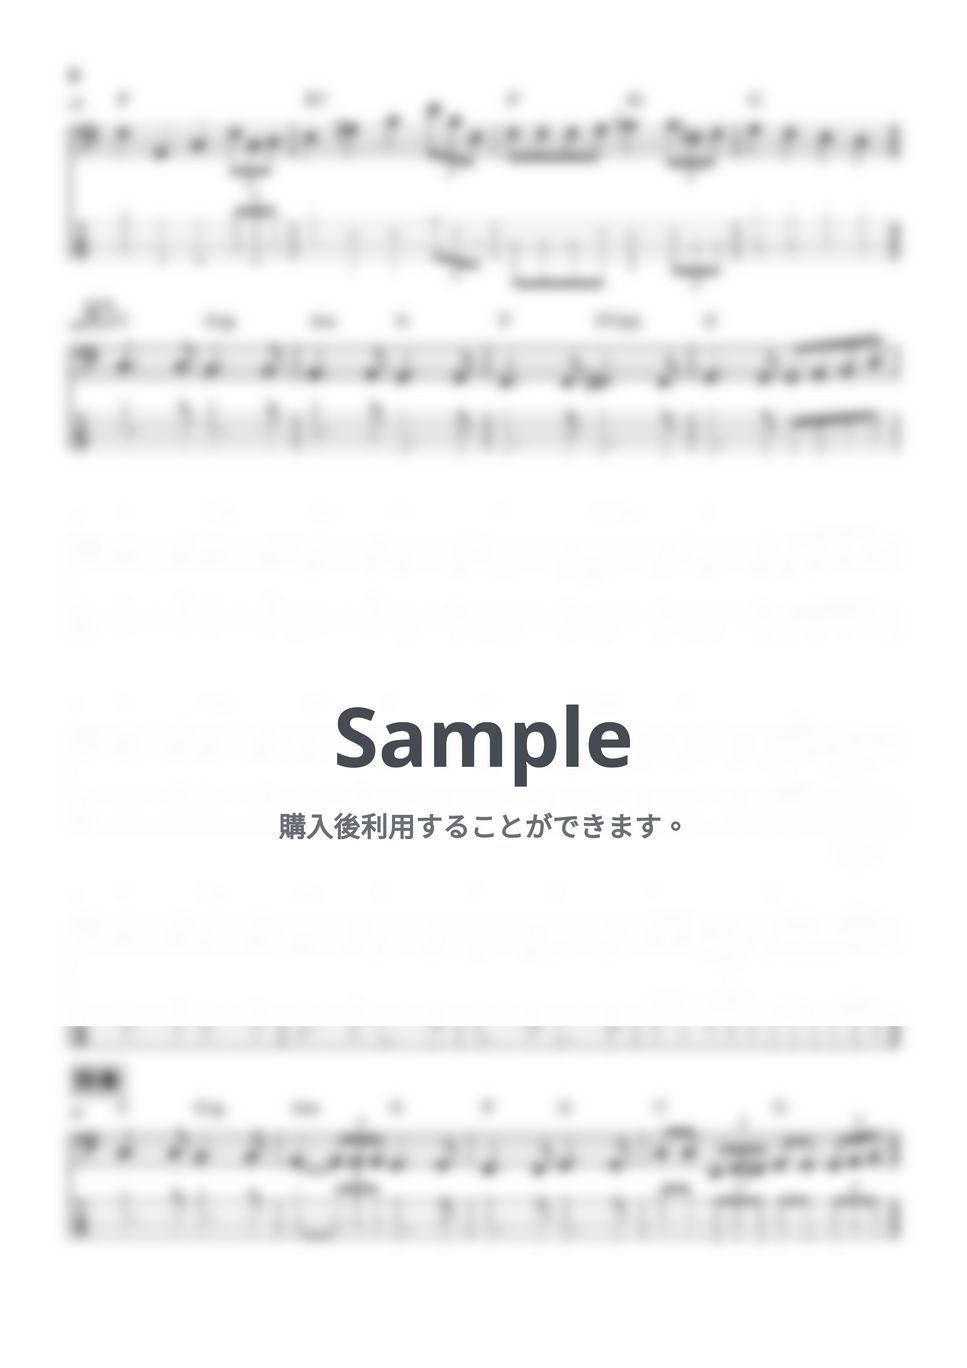 THE YELLOW MONKEY - JAM (『ポップジャム』エンディングテーマ、ベース譜) by Kodai Hojo